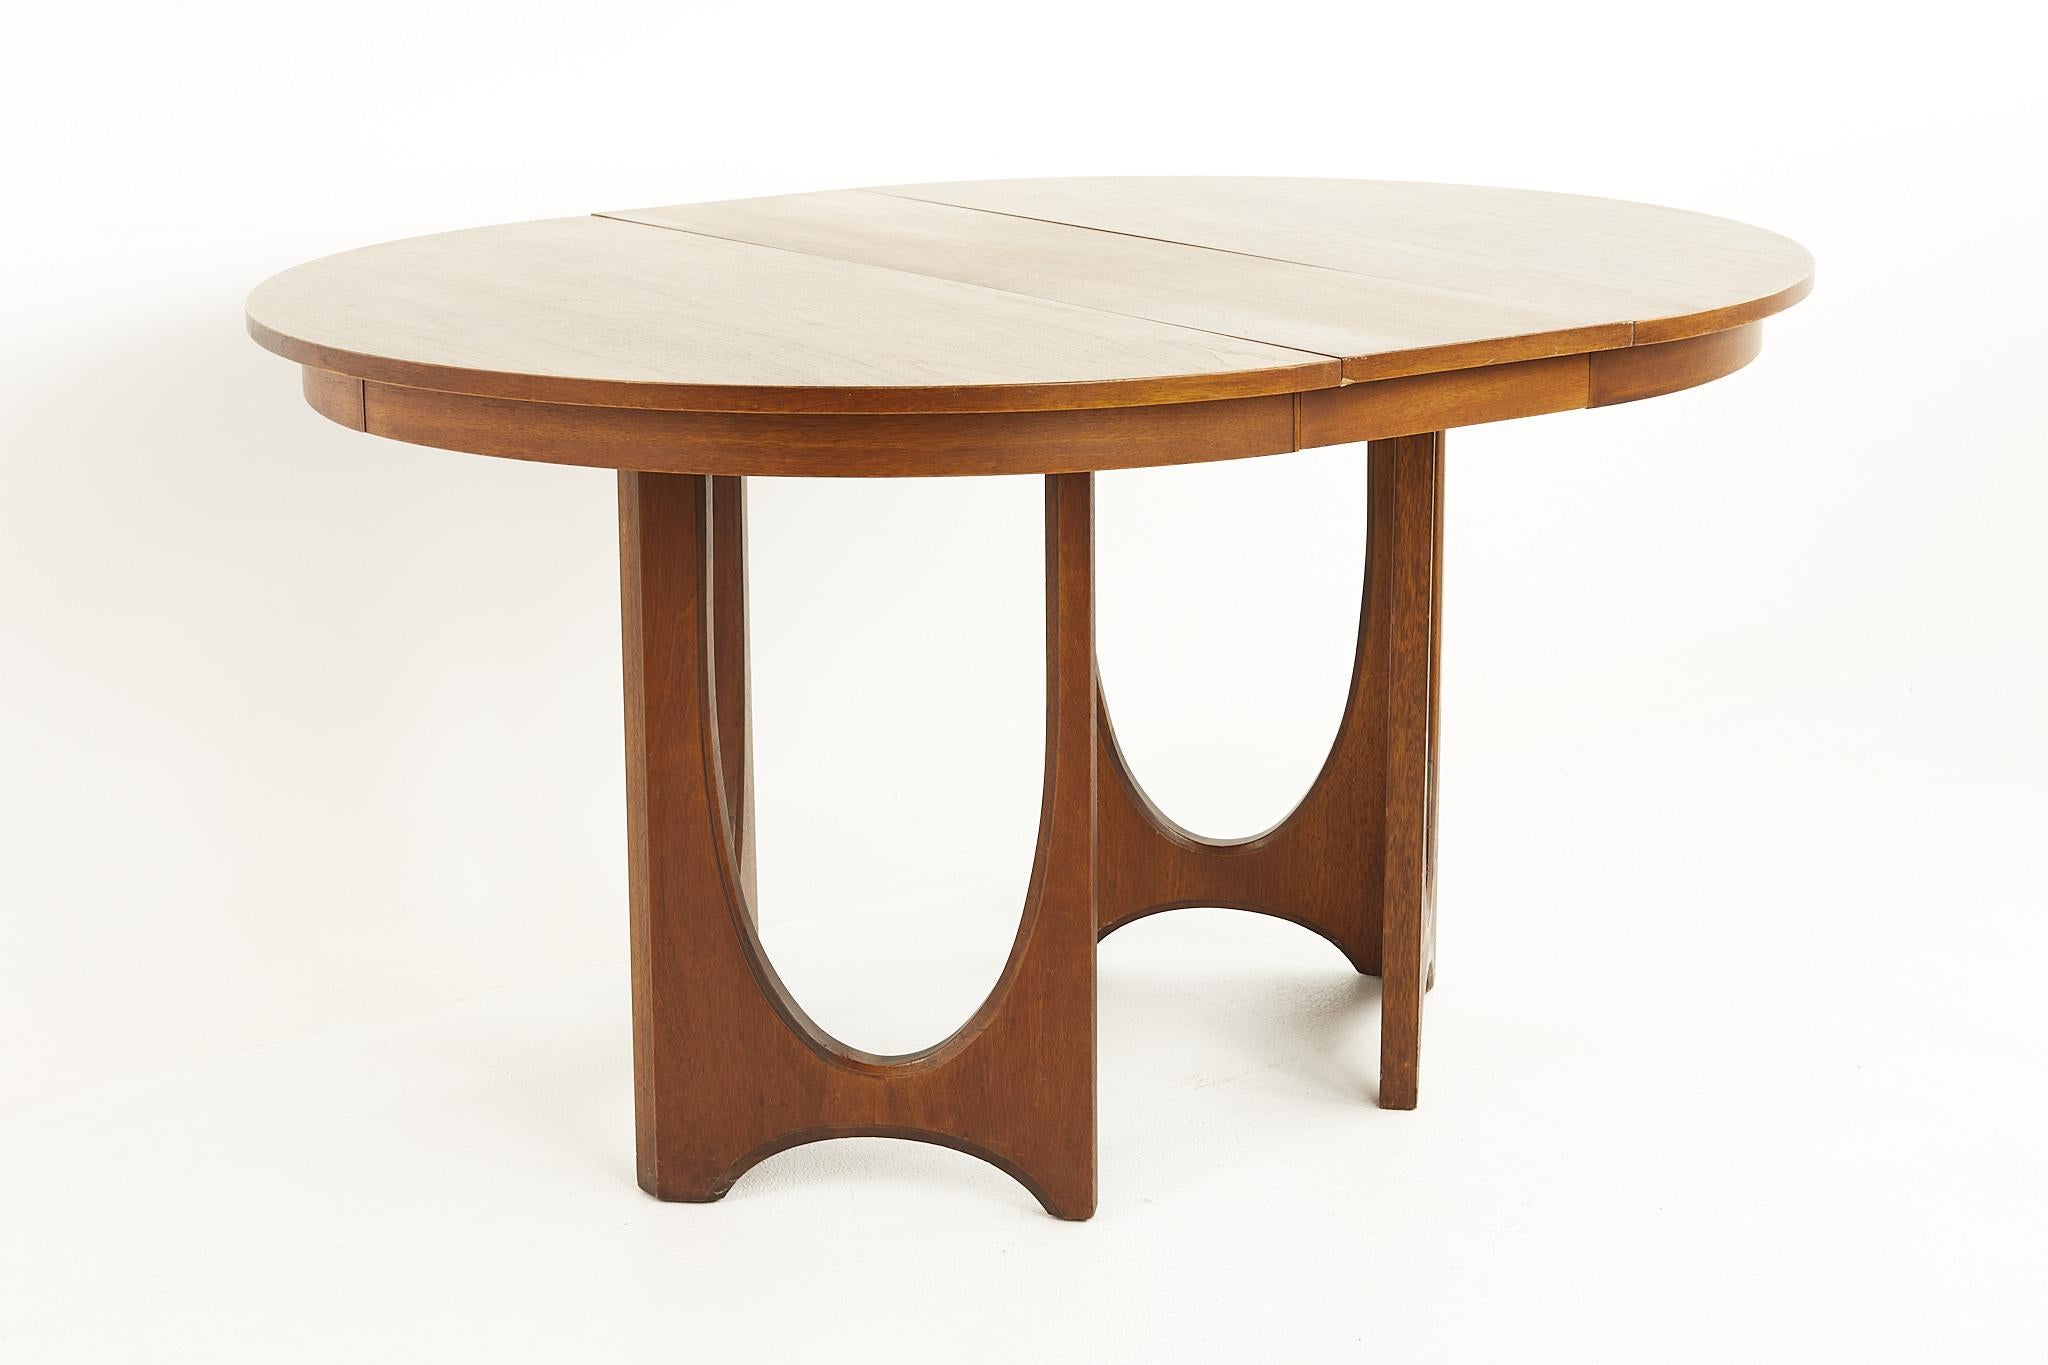 Mid-Century Modern Broyhill Brasilia Mid Century Round Walnut Pedestal Dining Table - 2 Leaves